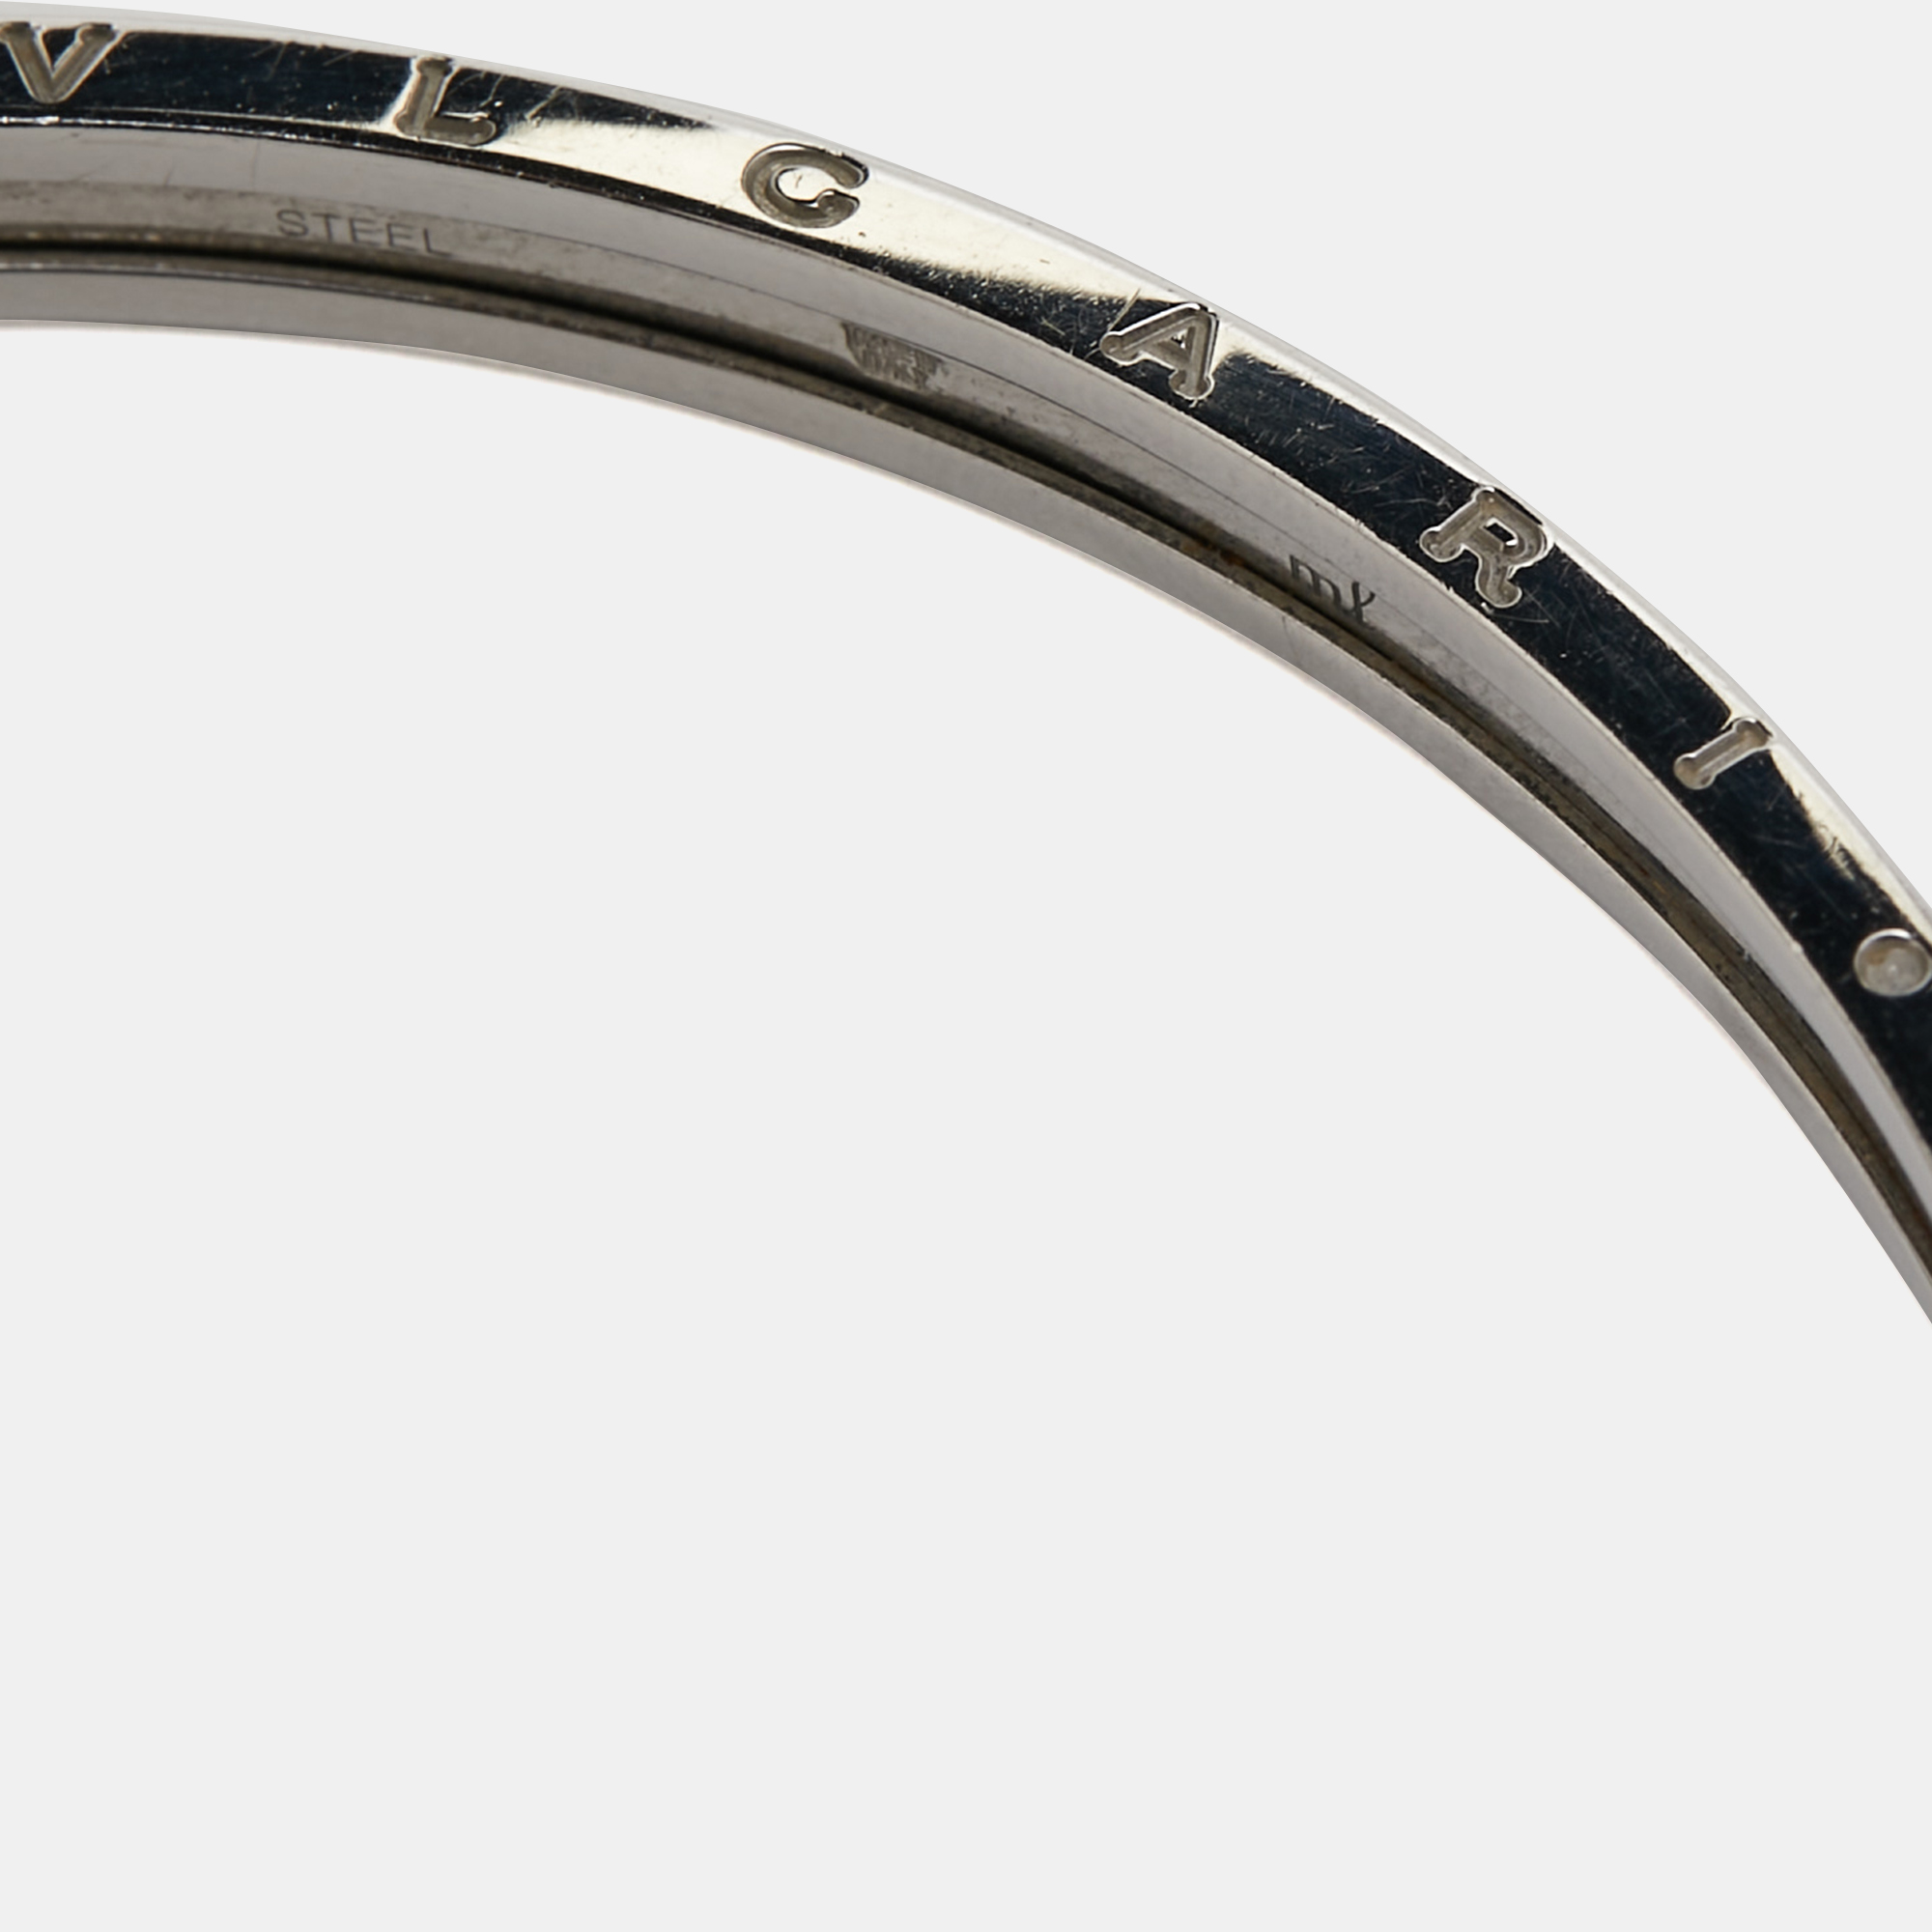 Bvlgari B.Zero1 18k Rose Gold Stainless Steel Open Cuff Bracelet M/L